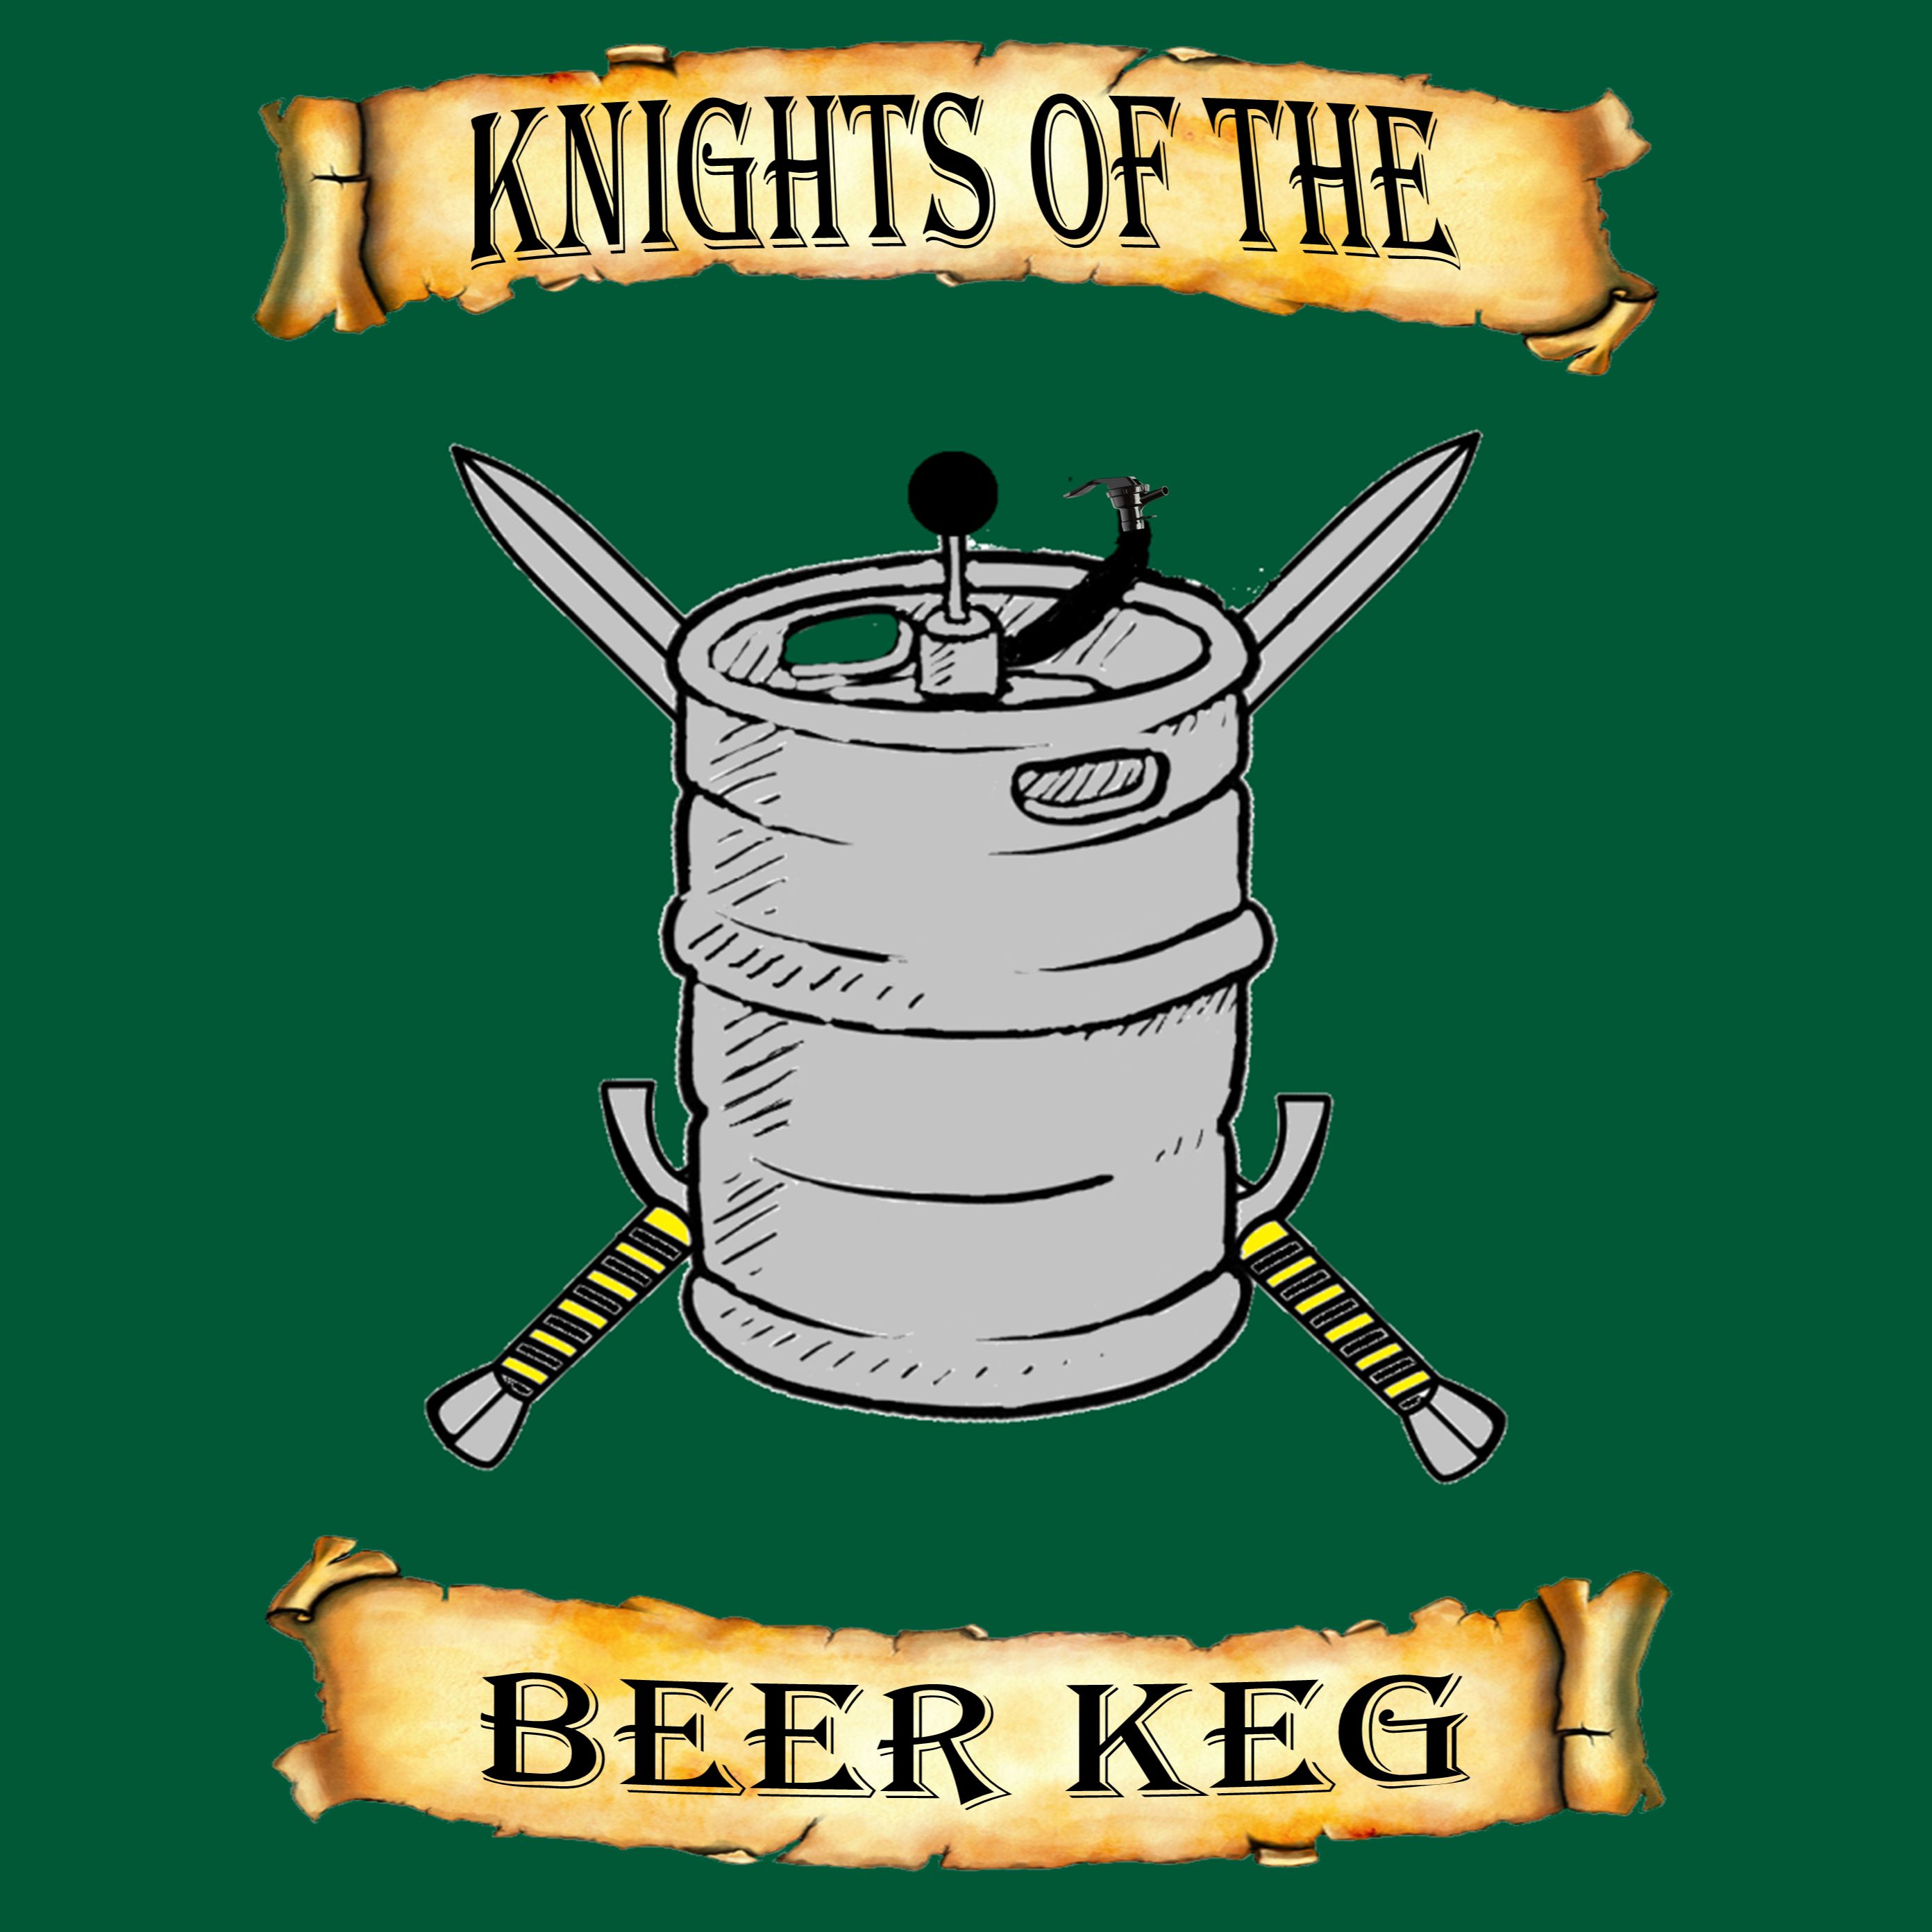 Knights of the Beer Keg